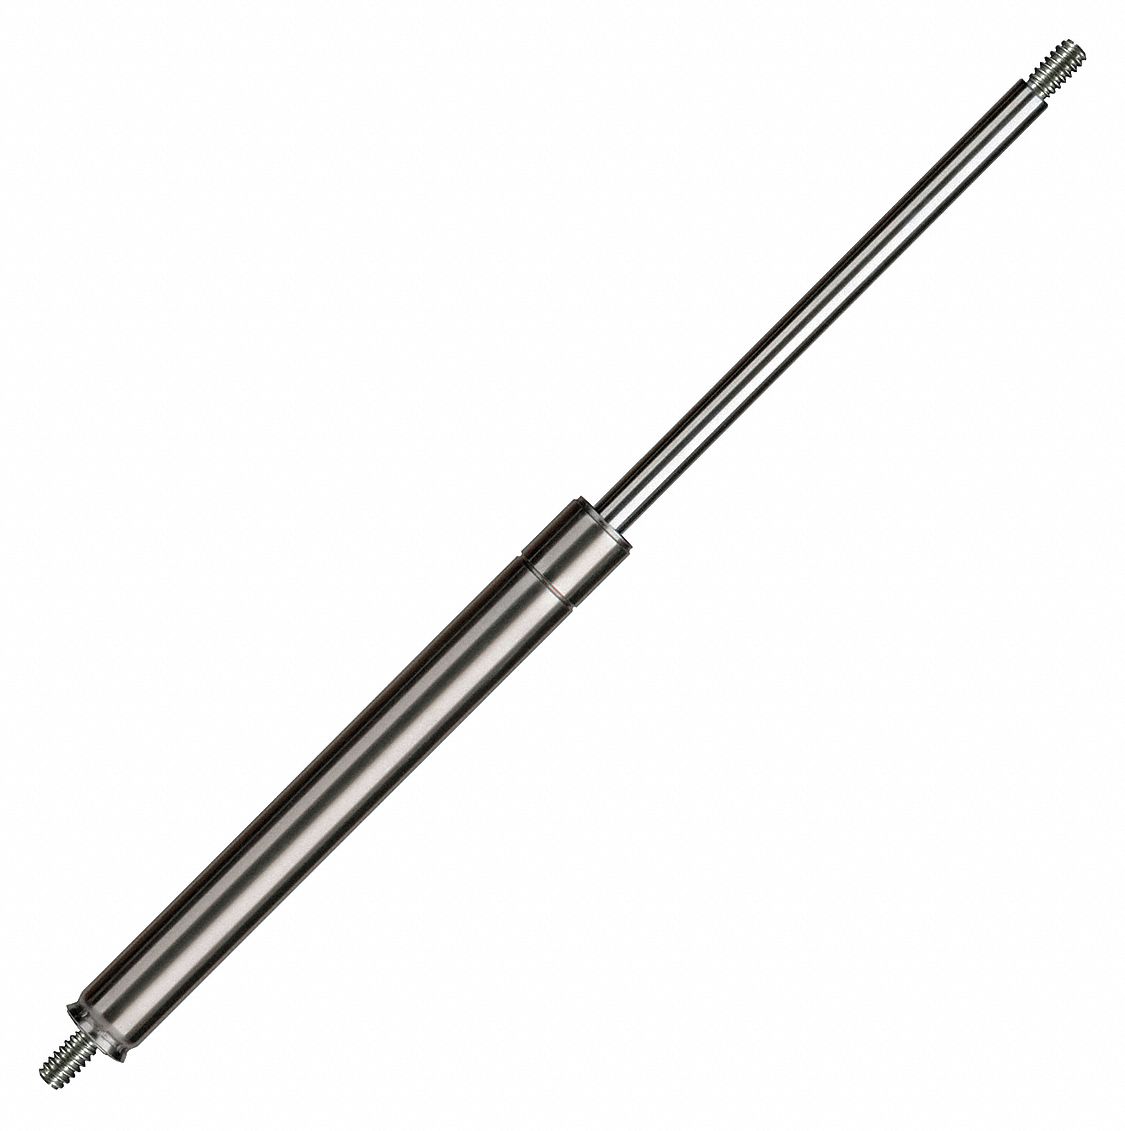 Standard Strut: Std, 70 to 212 lb, Stainless Steel, M10x1.5 Rod Thread Size